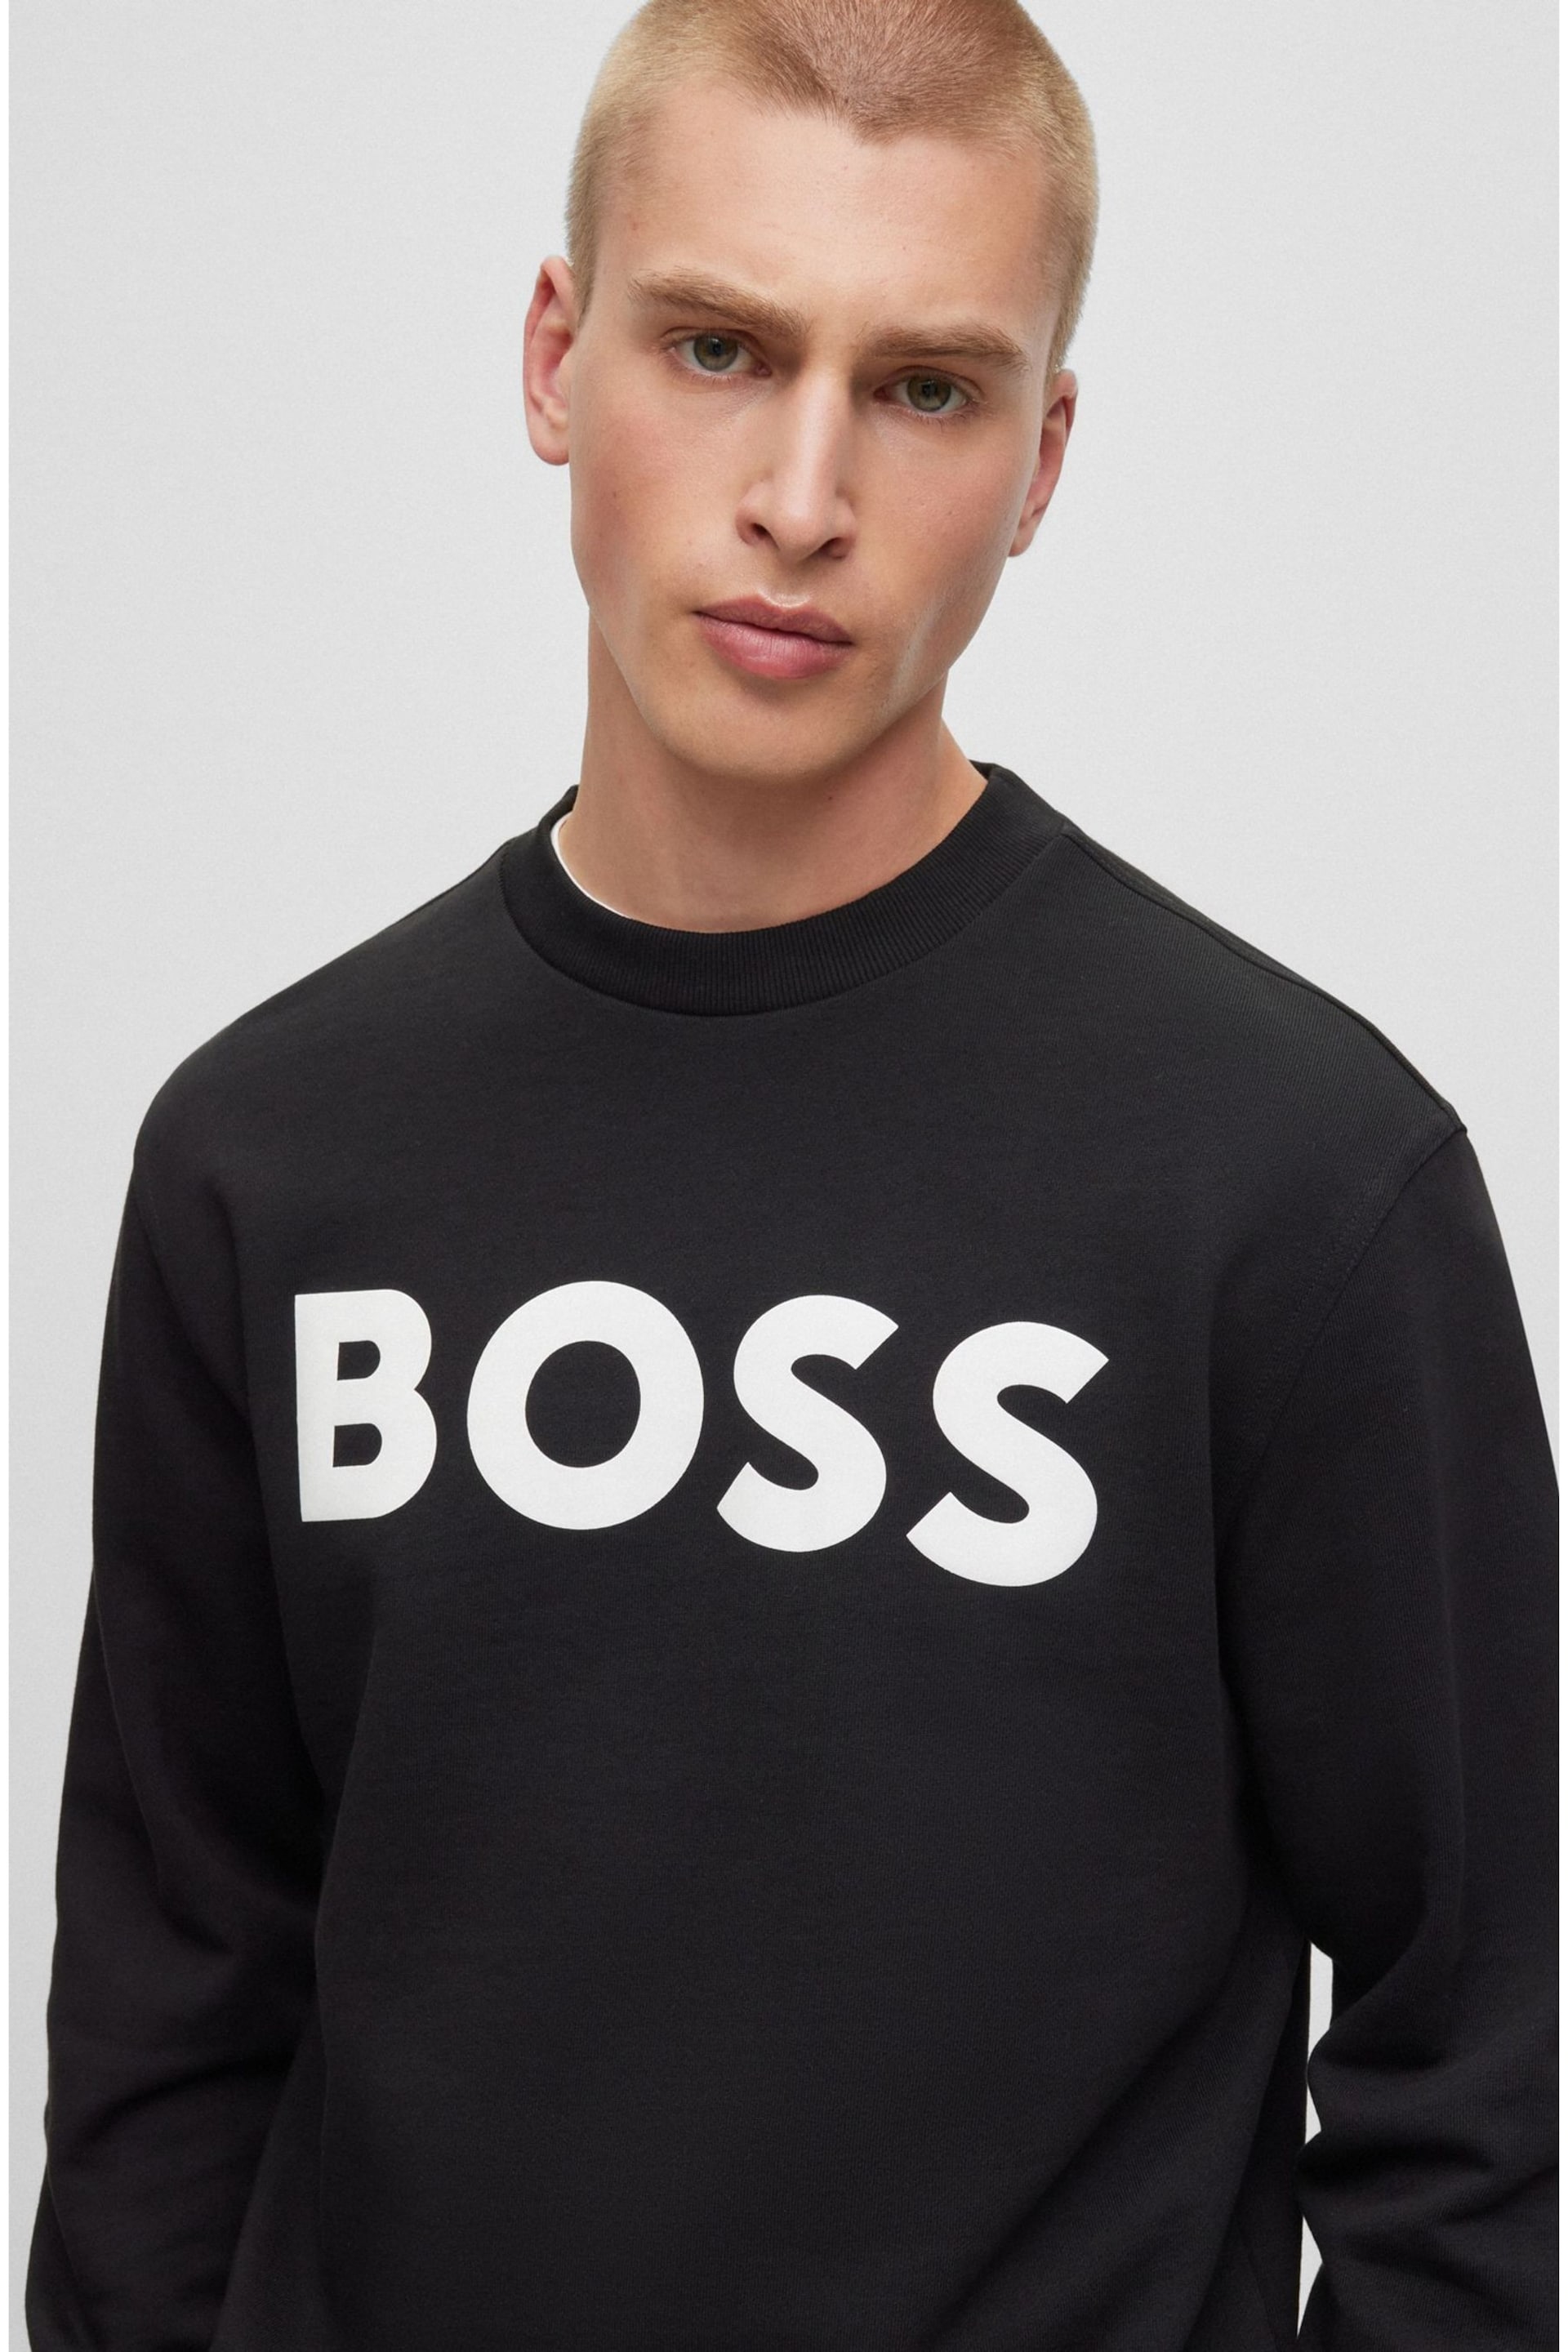 BOSS Black Large Logo French Terry Crew Neck Sweatshirt - Image 4 of 5